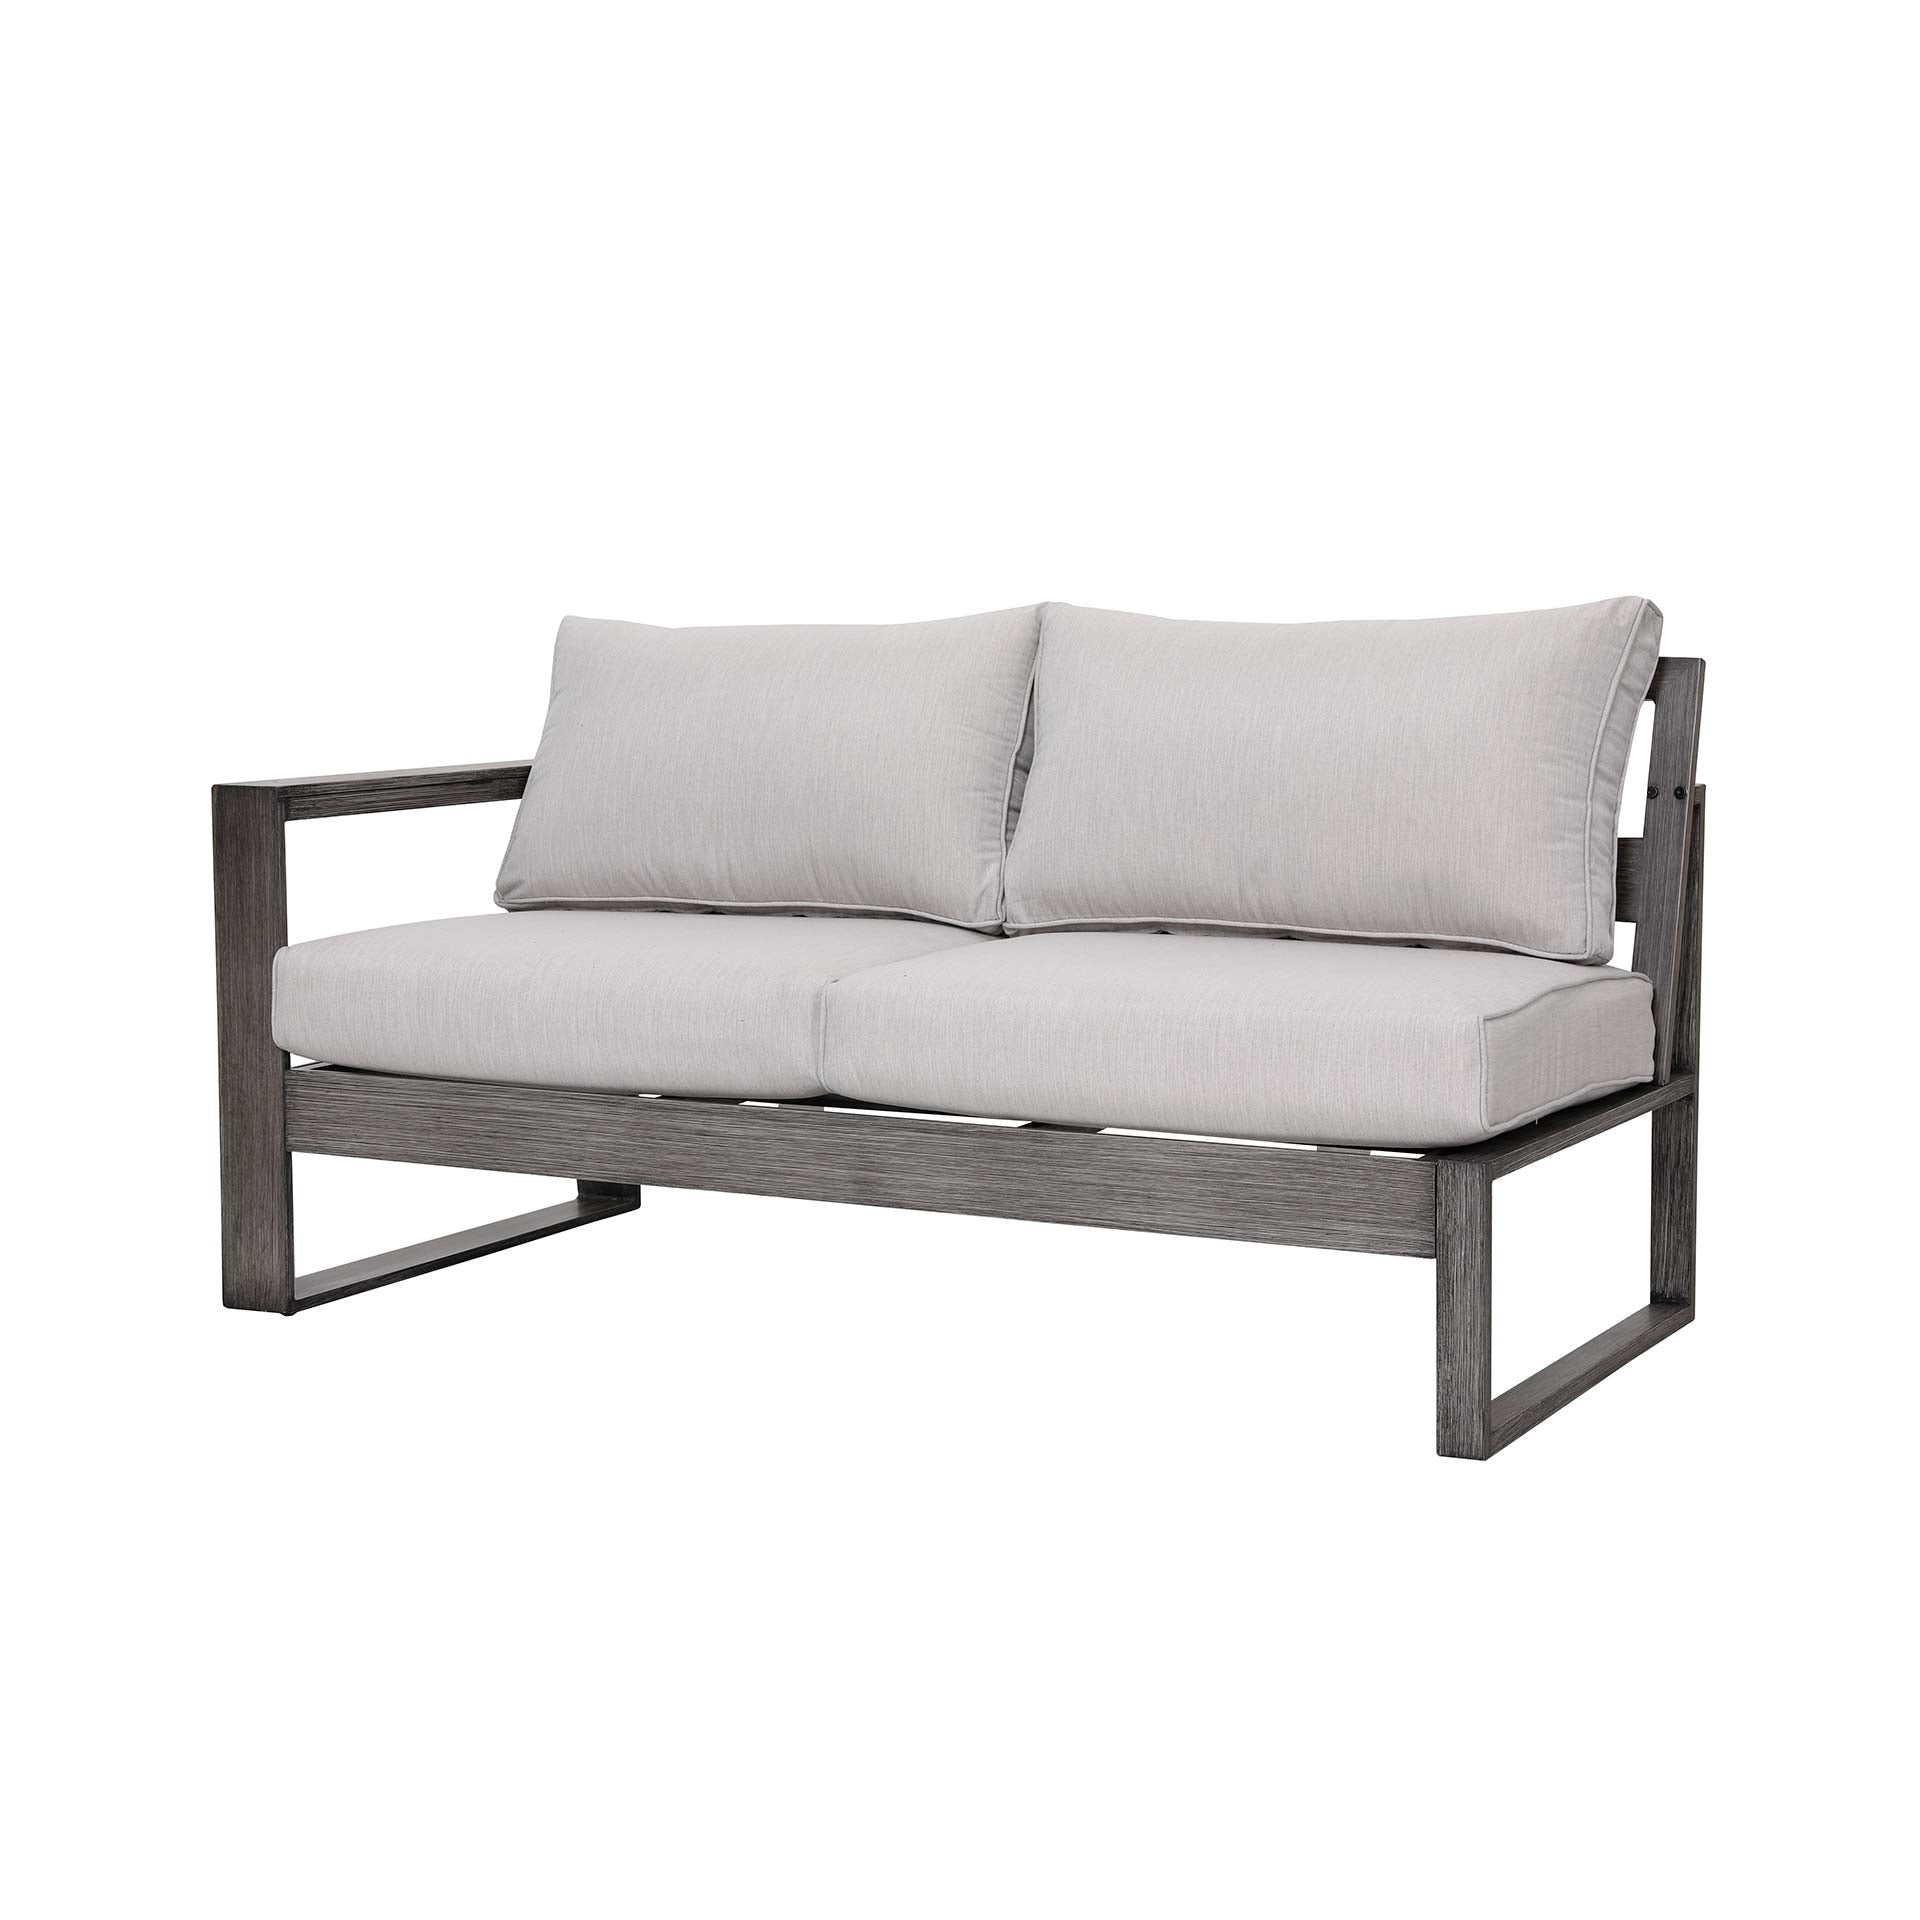 Patio Time Walsh 4-Piece Aluminum Sectional Sofa Set